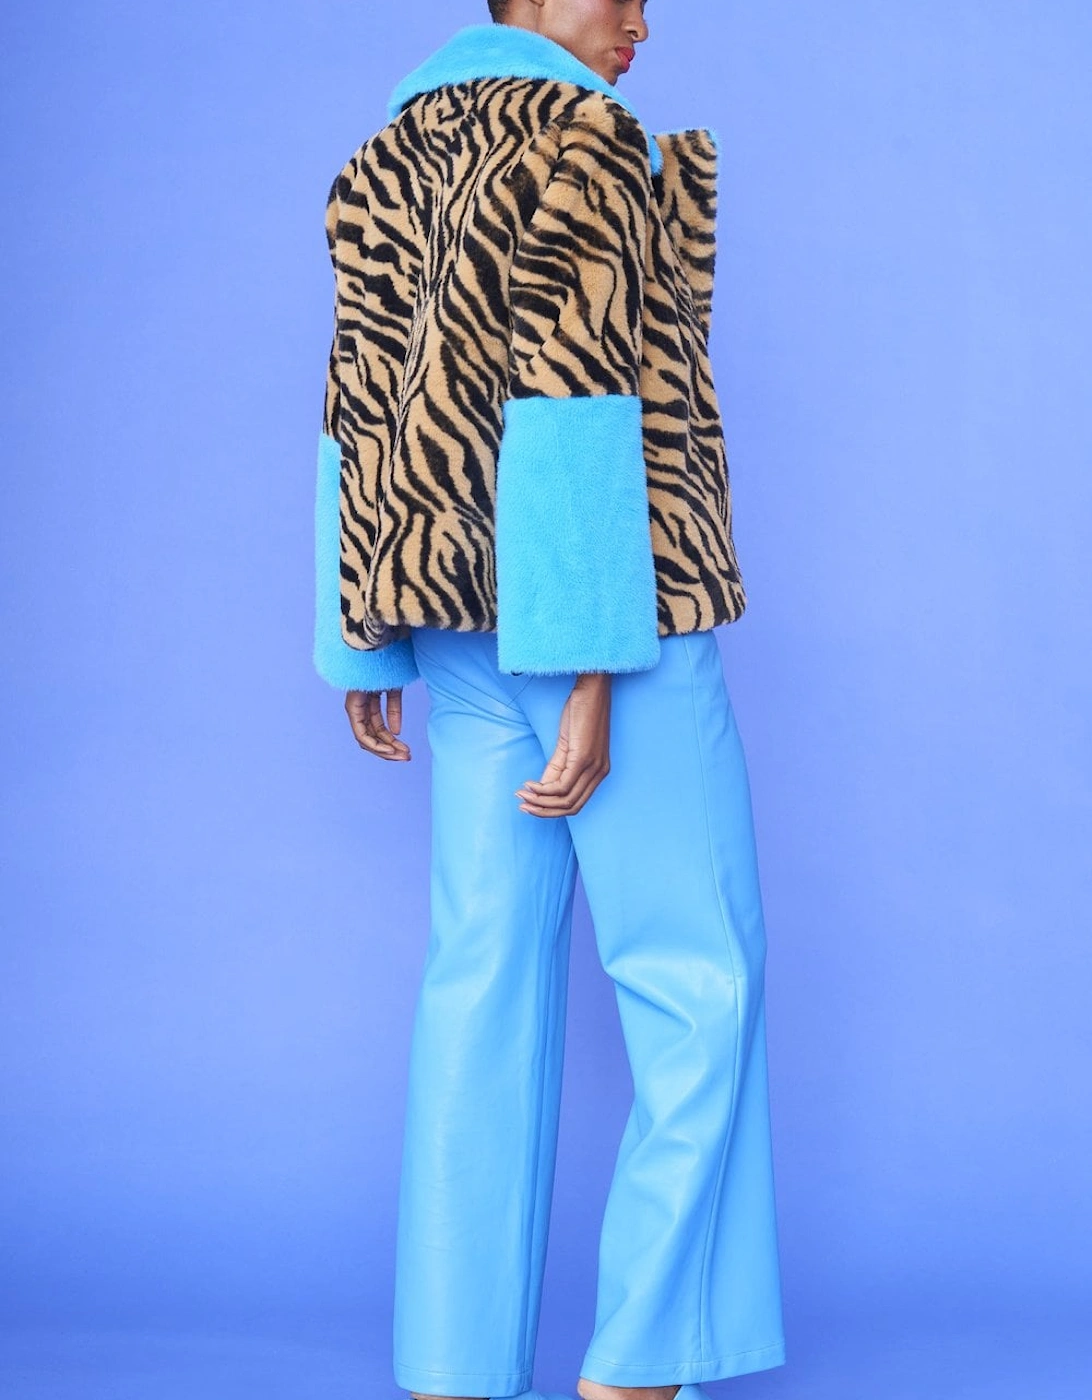 Blue and Leopard Print Faux Fur Coat